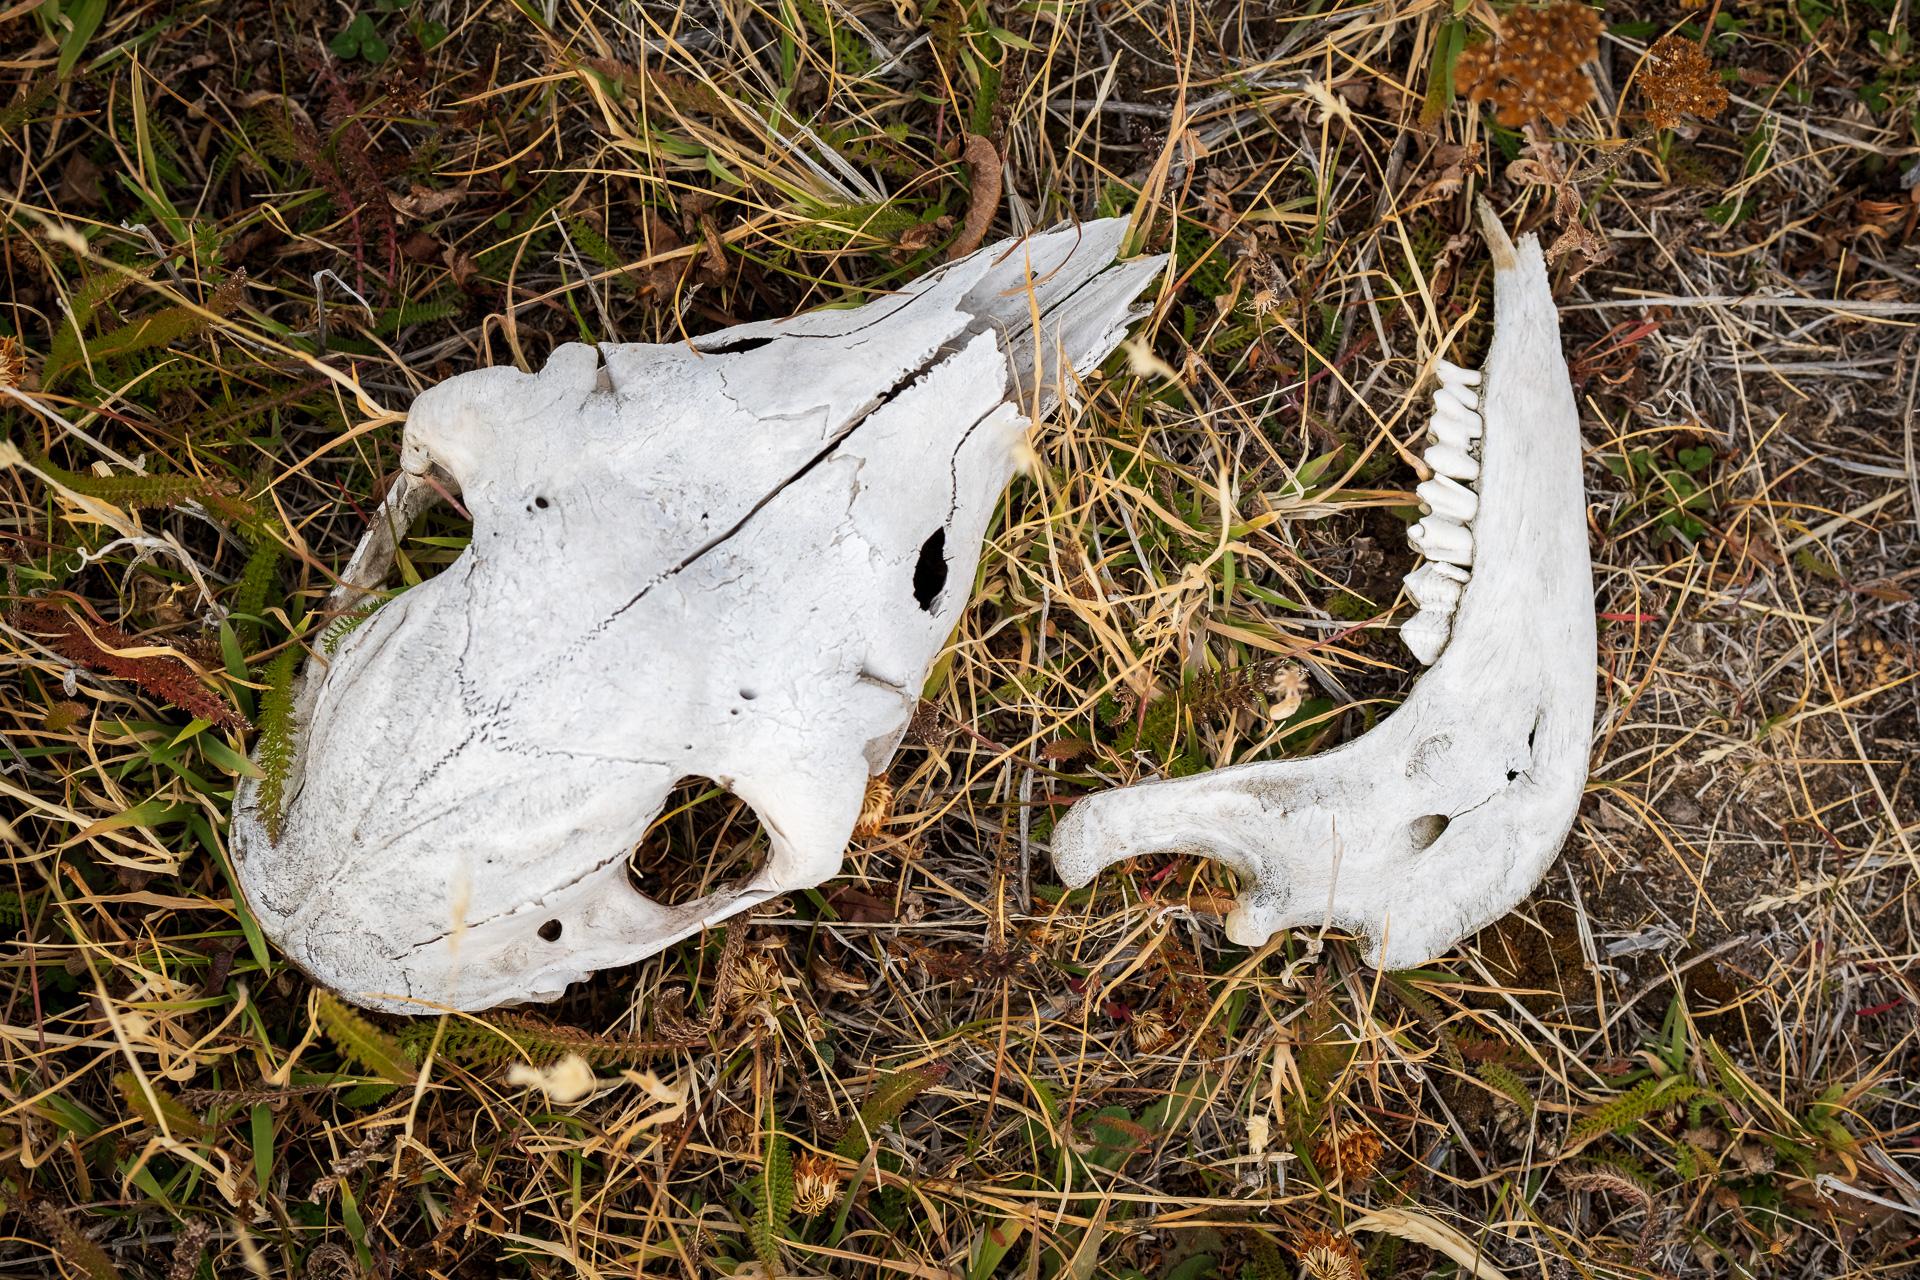 Guanaco bones in Tores del Paine NP